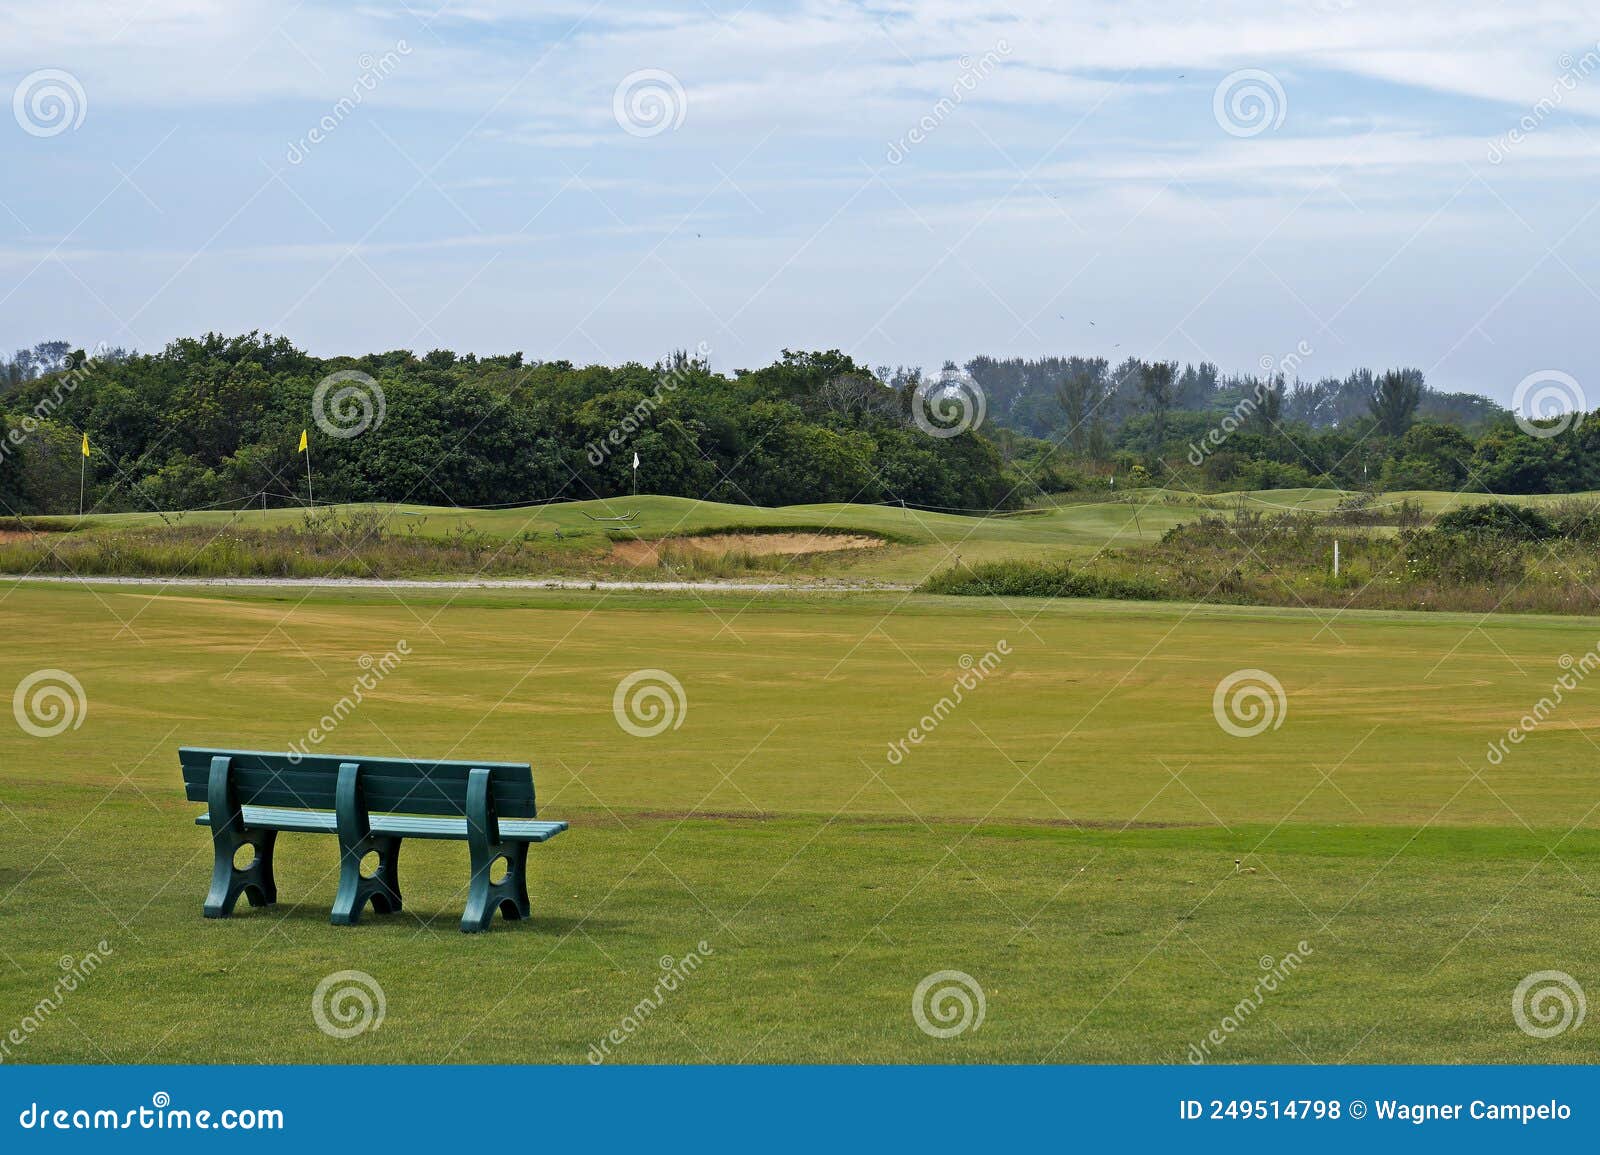 green bench in front of golf course, barra da tijuca